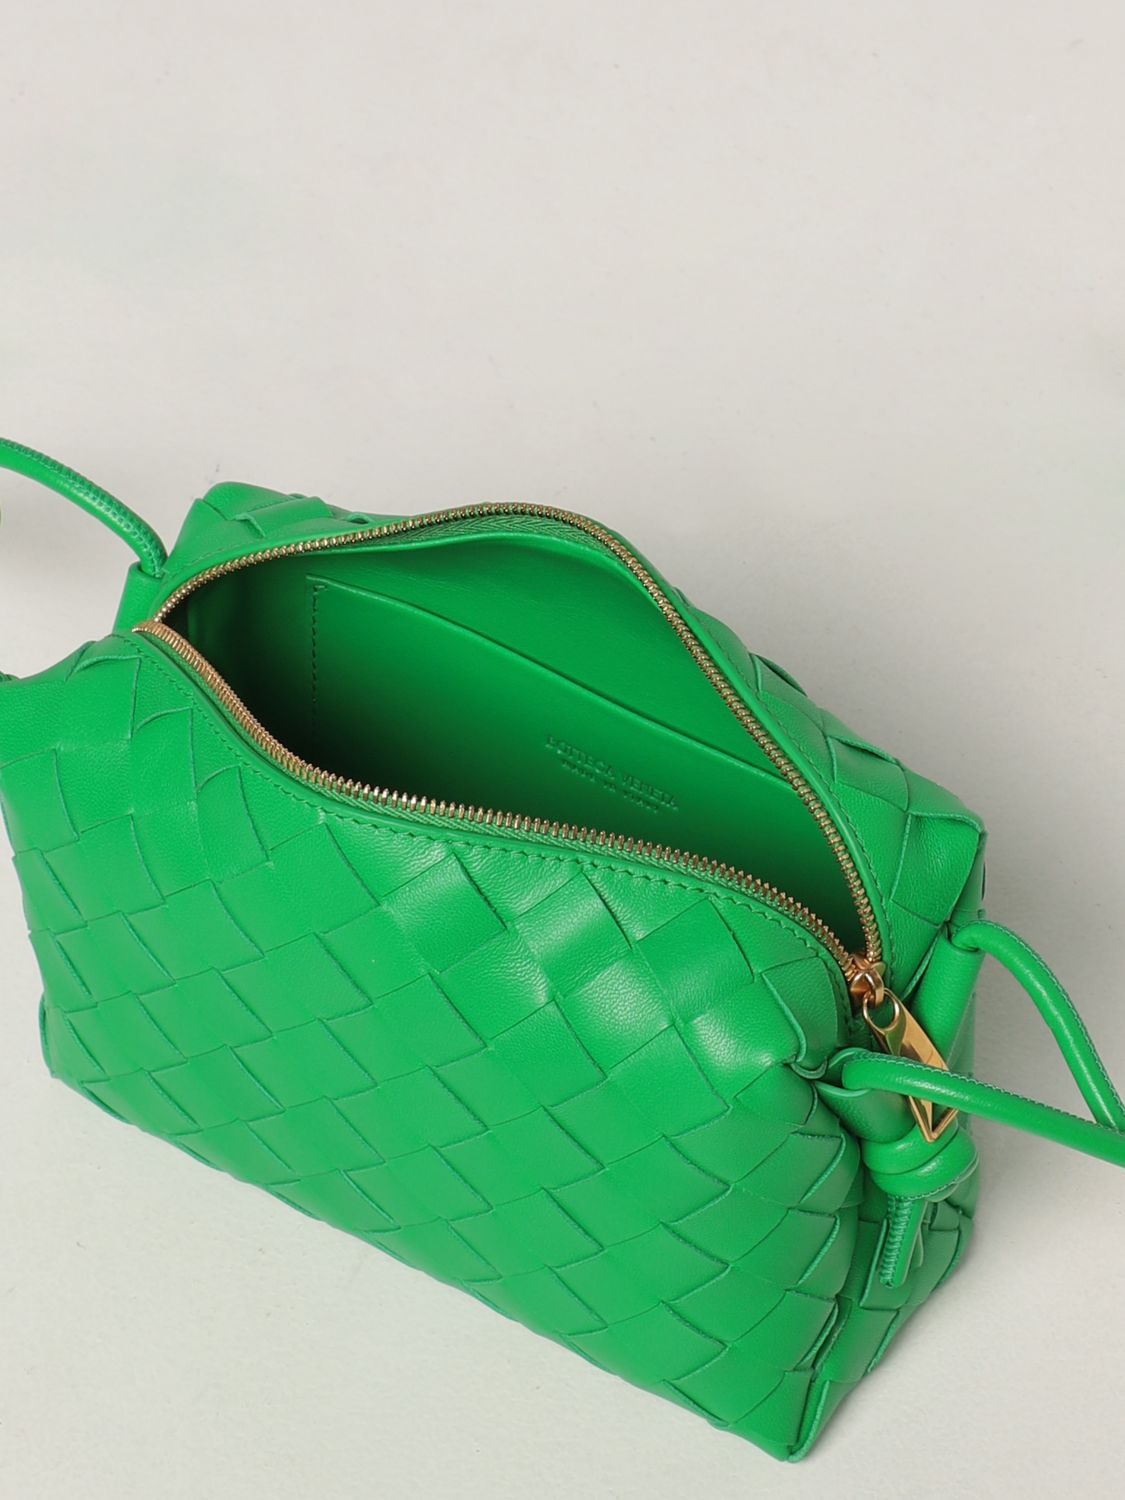 Download Green Bottega Veneta Bag Wallpaper